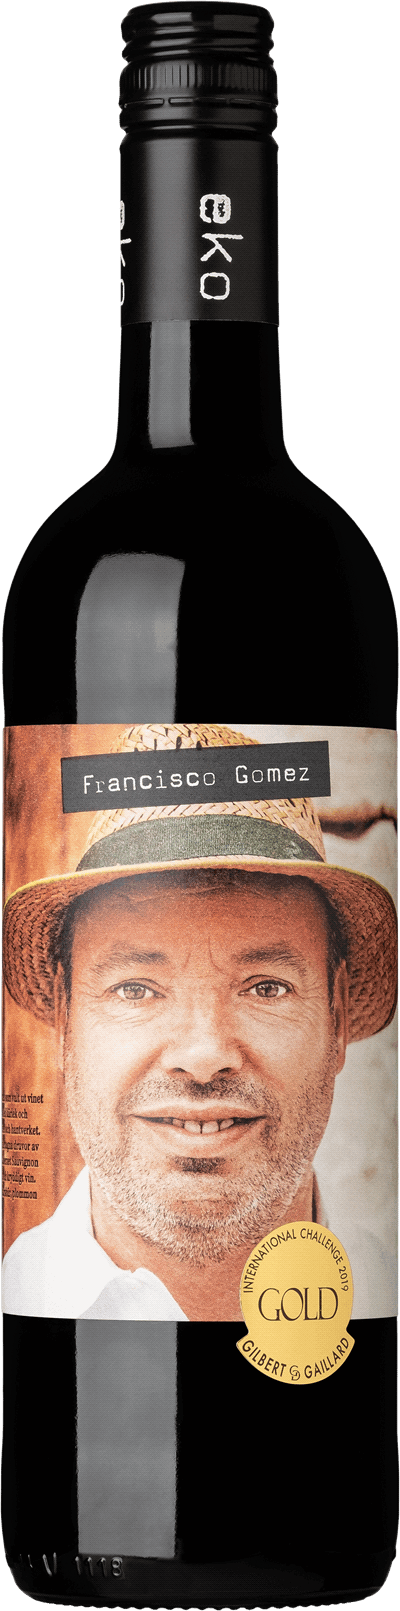 Francisco Gomez Hacienda La Serrata 2020 - DinVinguide Francisco Gomez Hacienda La Serrata 2020